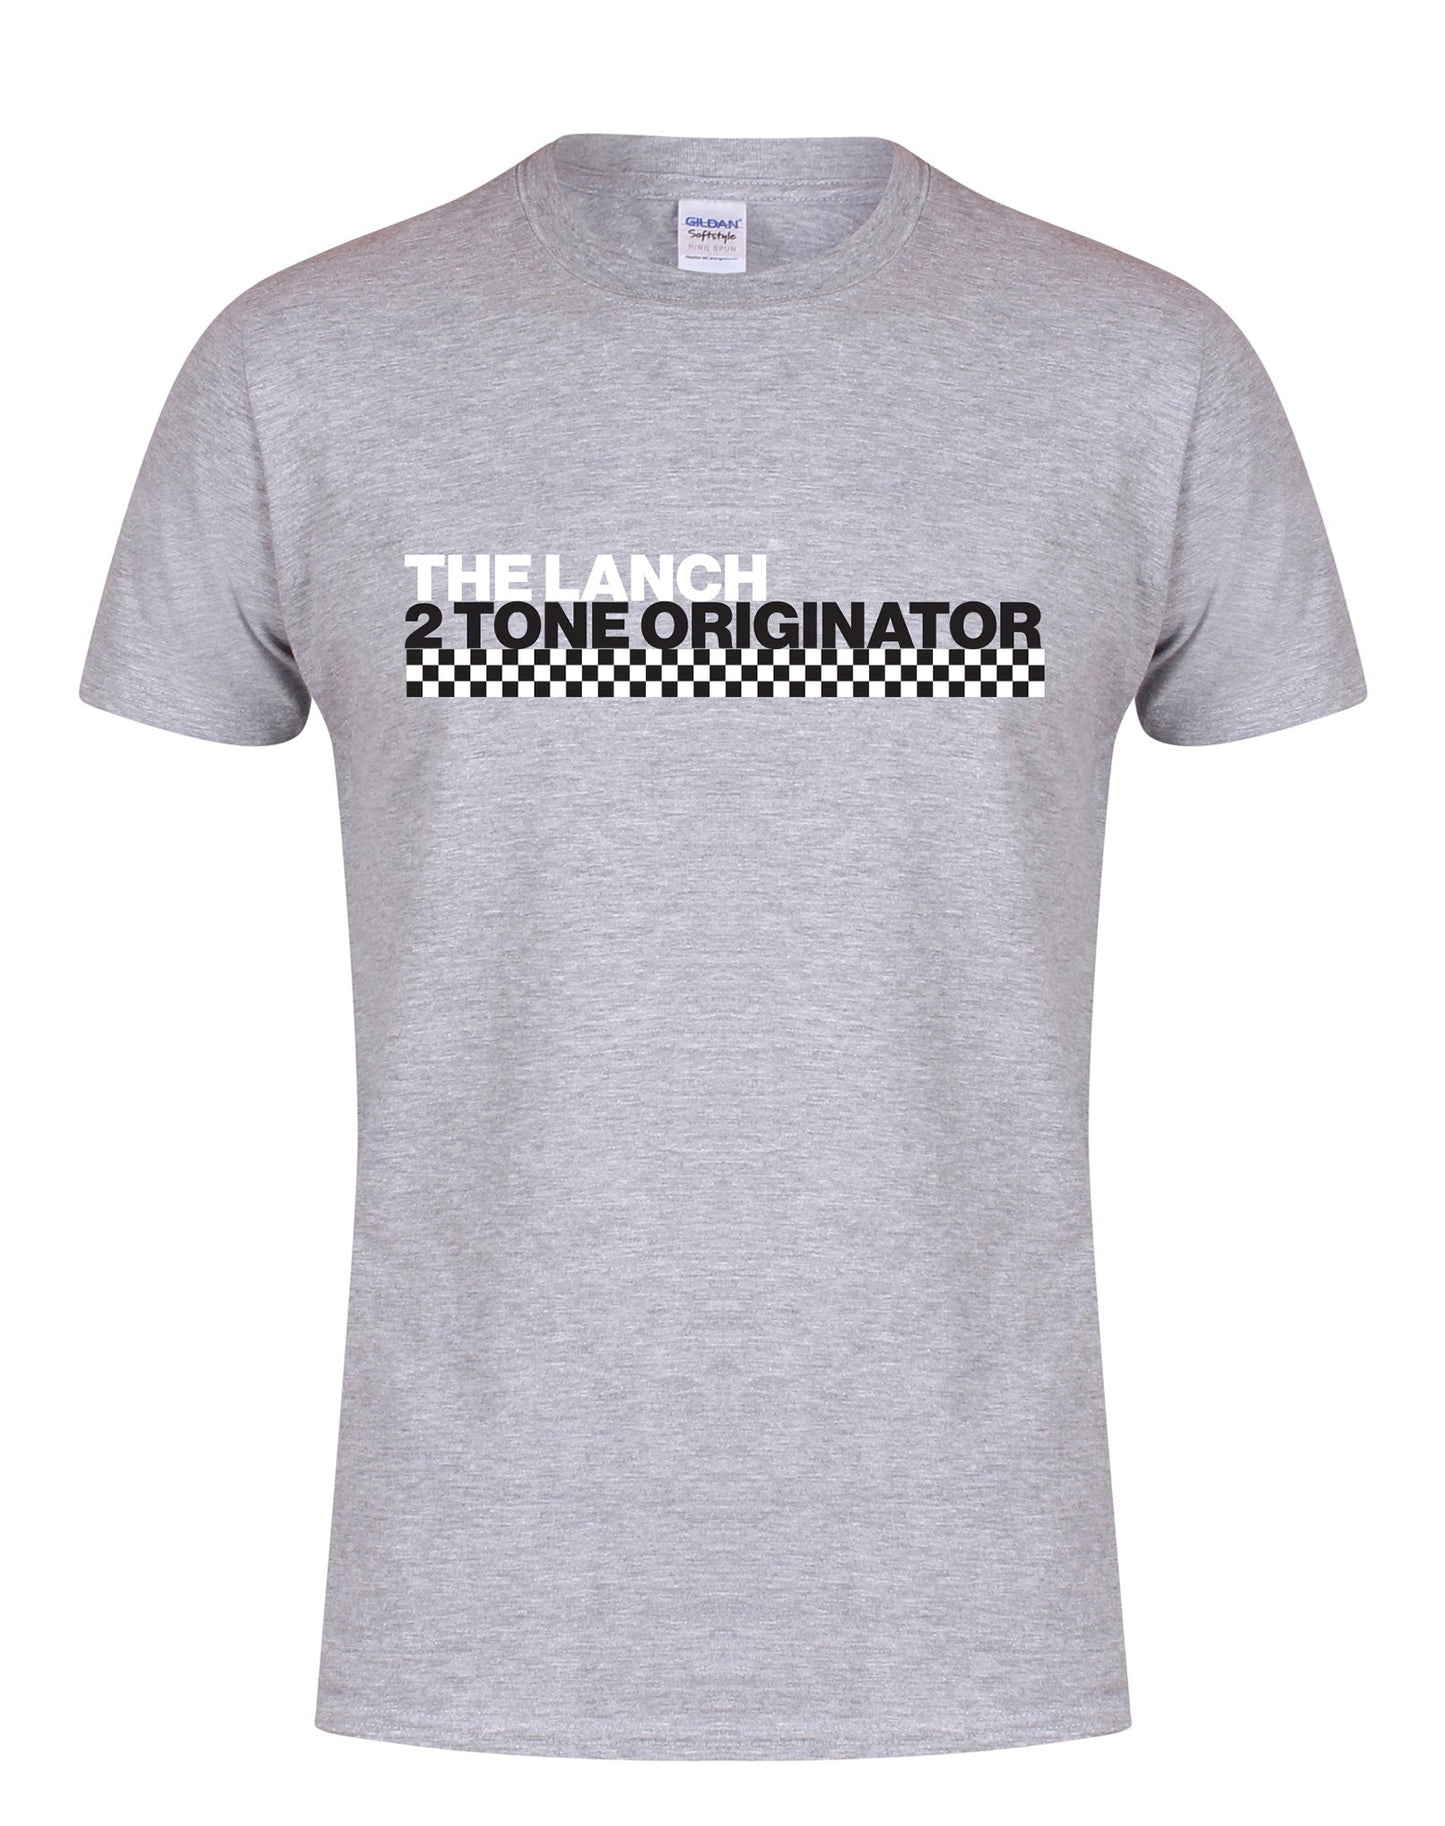 The Lanch - 2 Tone Originator - unisex fit T-shirt - various colours - Dirty Stop Outs